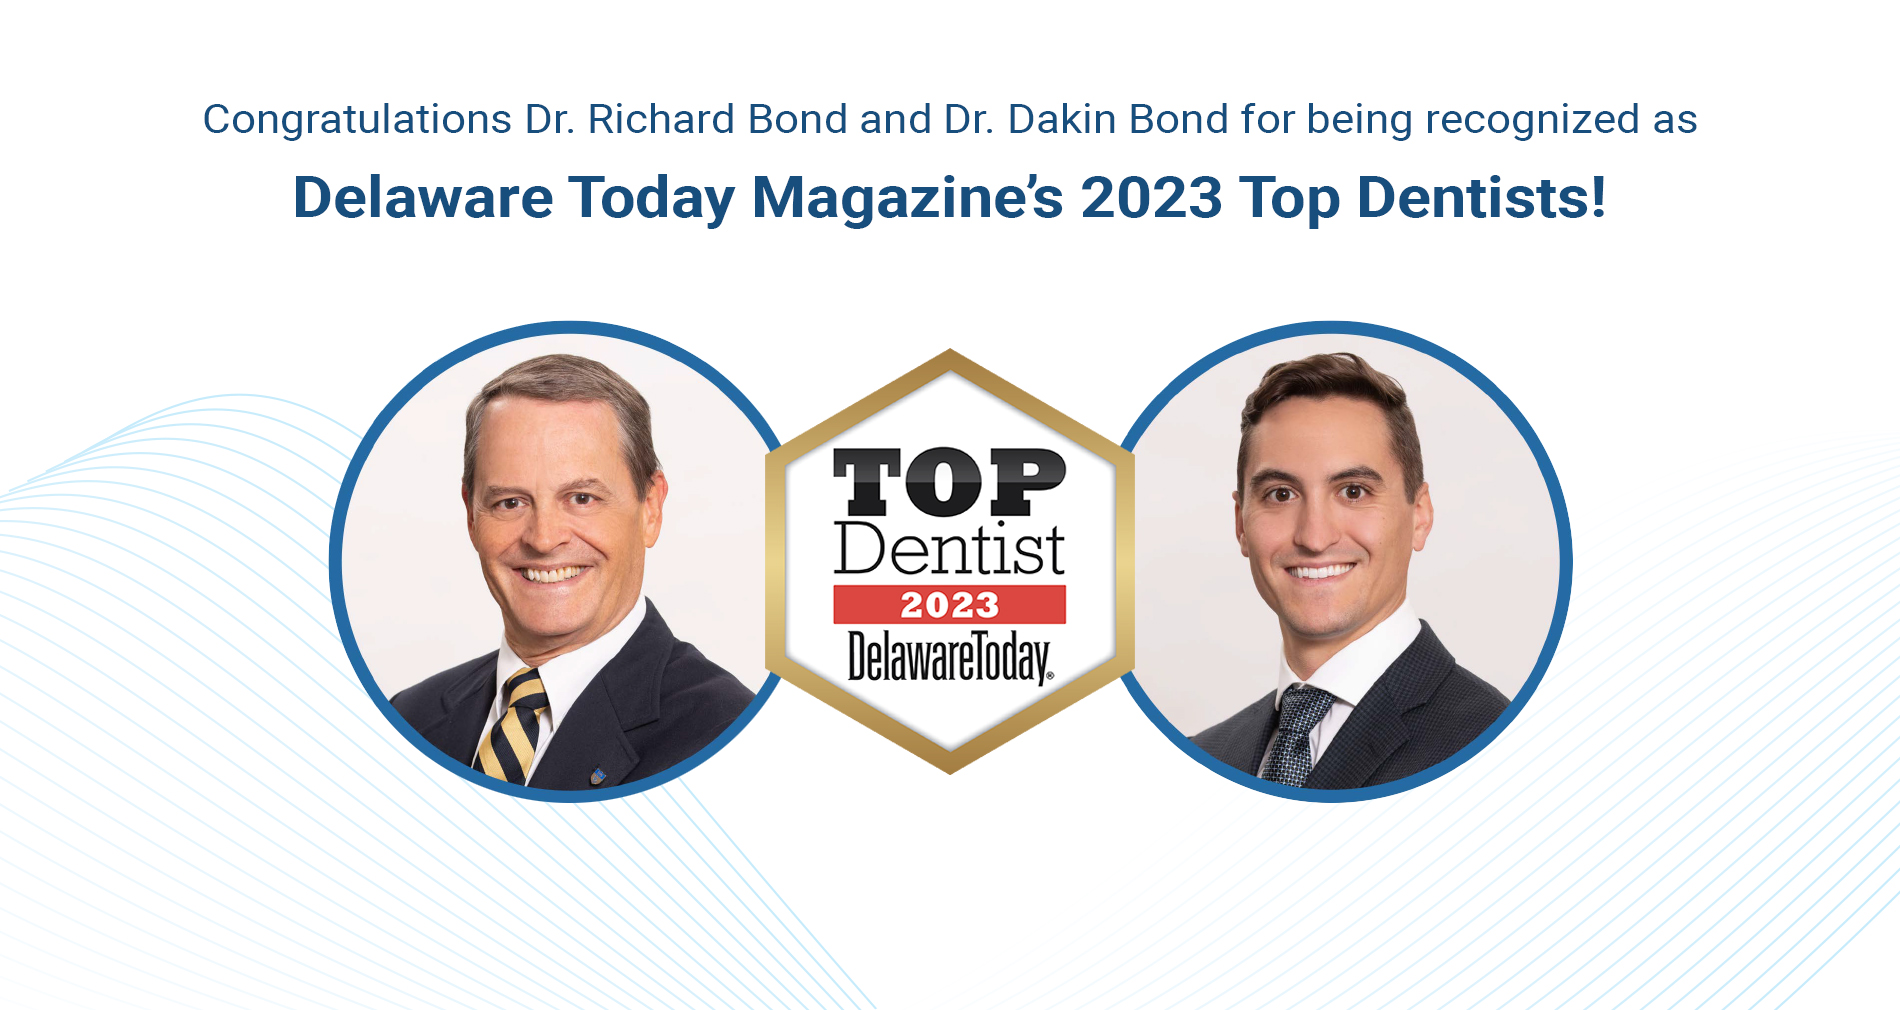 Delaware Today Magazine’s 2023 Top Dentists, Dr. Richard Bond and Dr. Dakin Bond